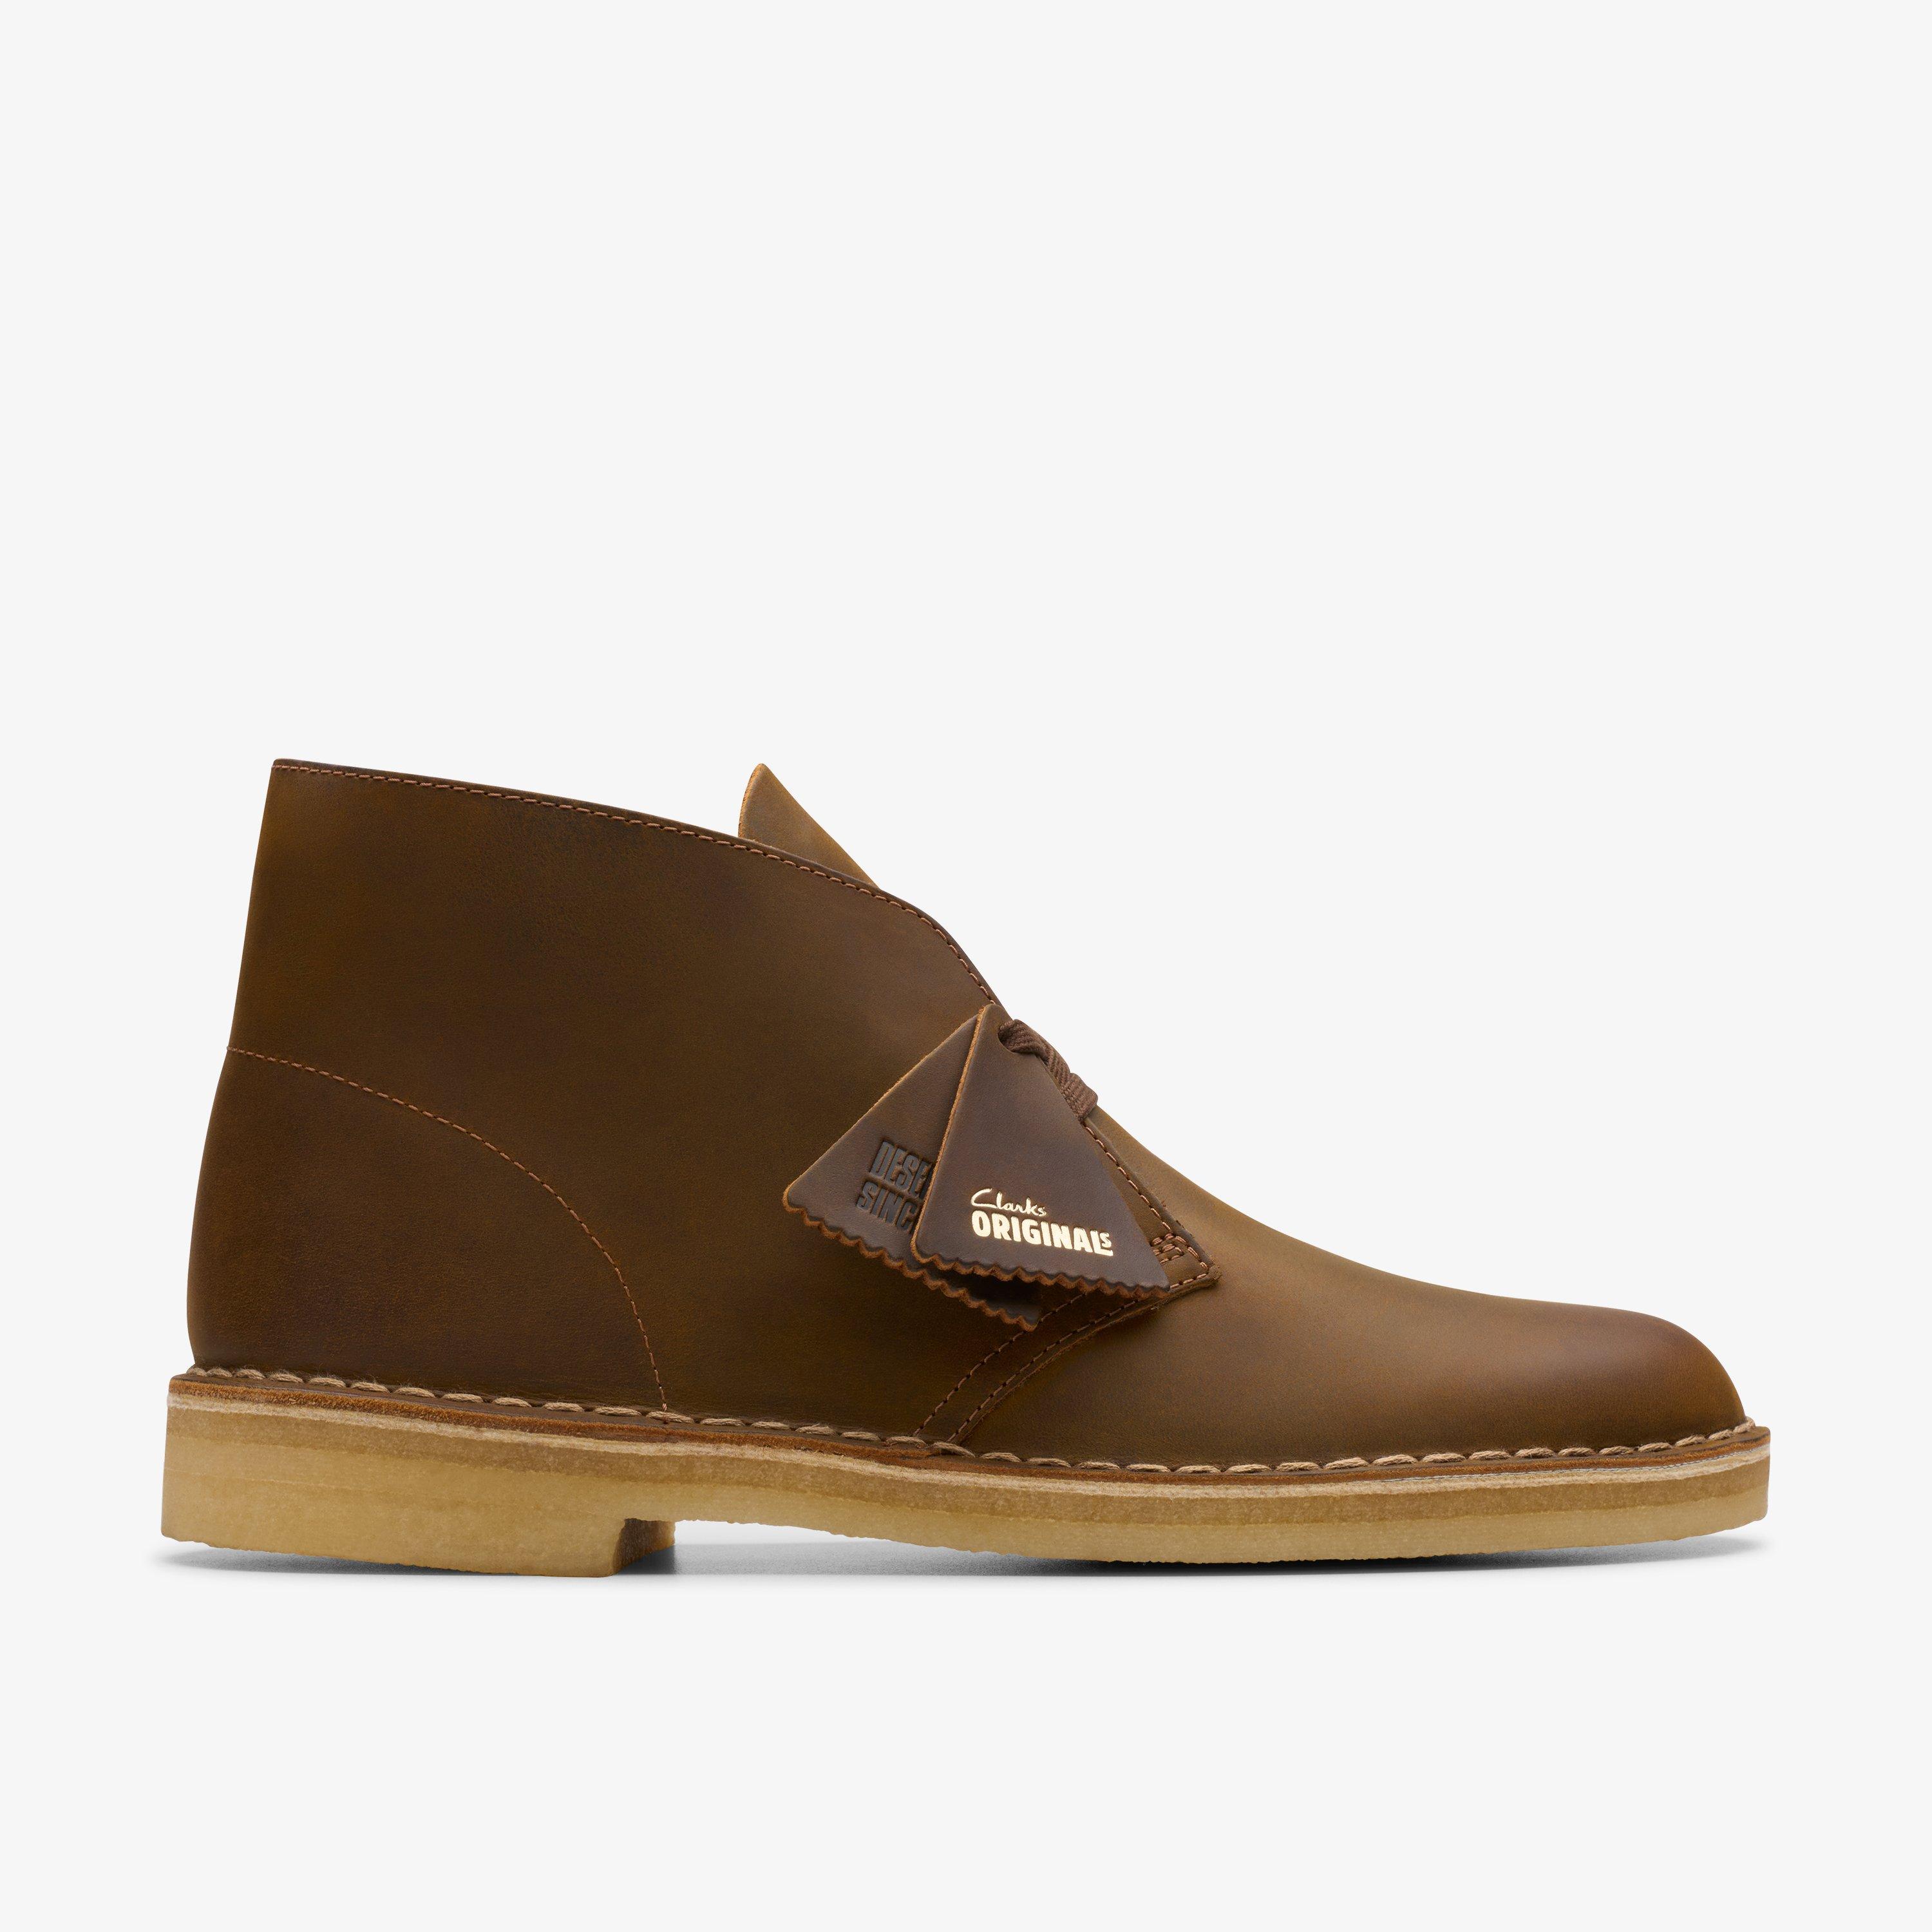 Clarks Men's Desert Boot - Beeswax Leather